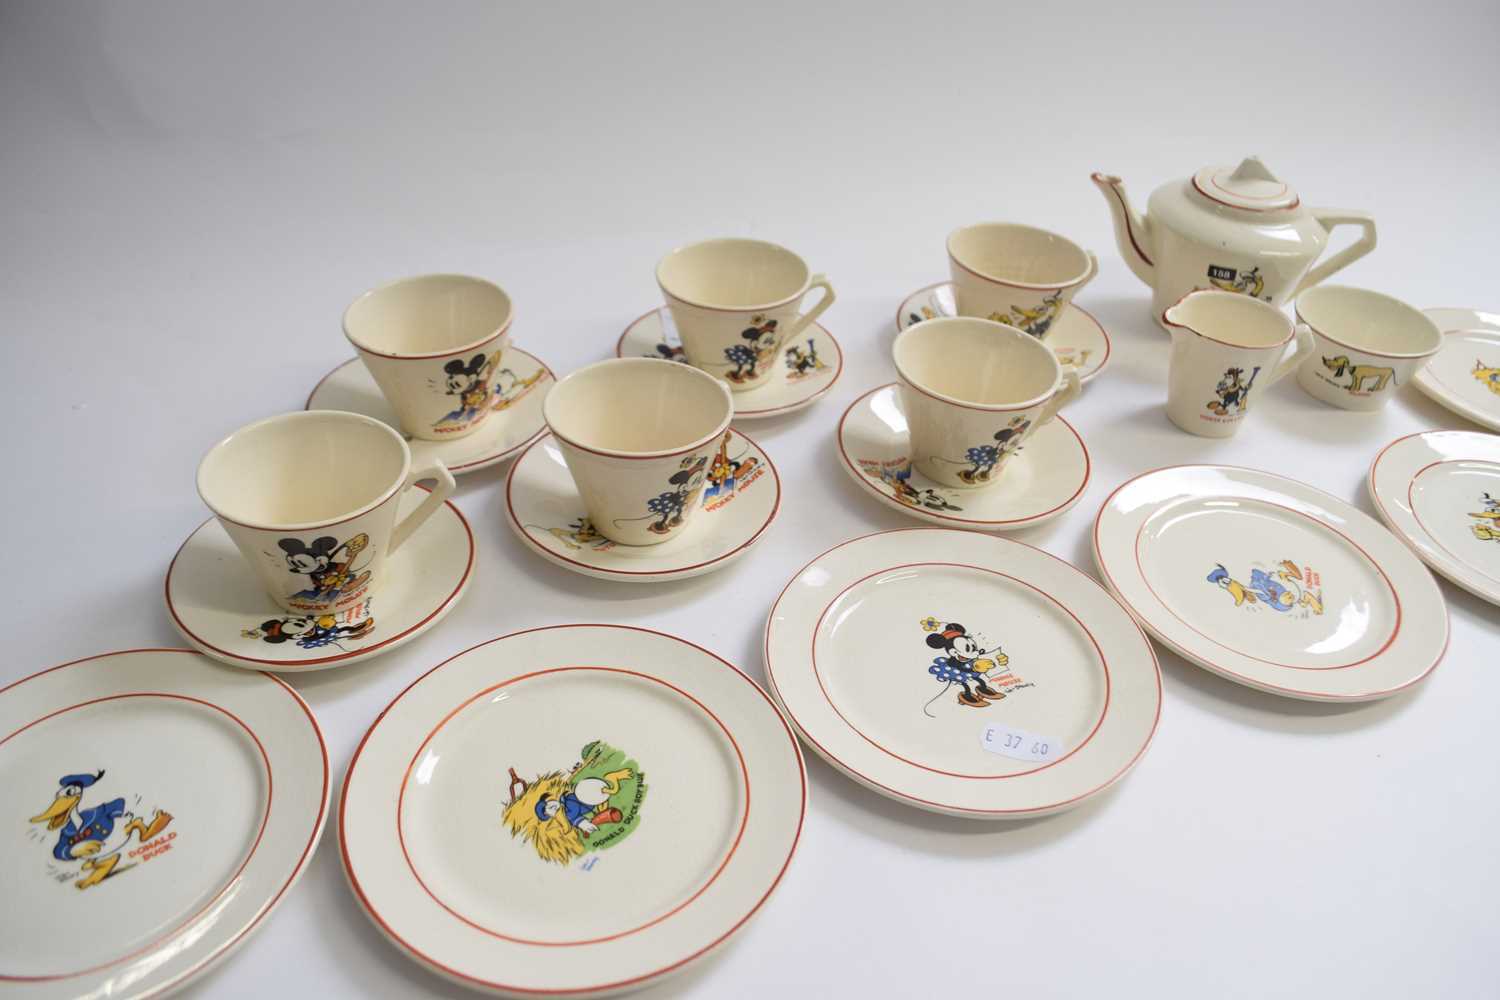 Vintage Mickey Mouse childrens tea set - Image 2 of 2